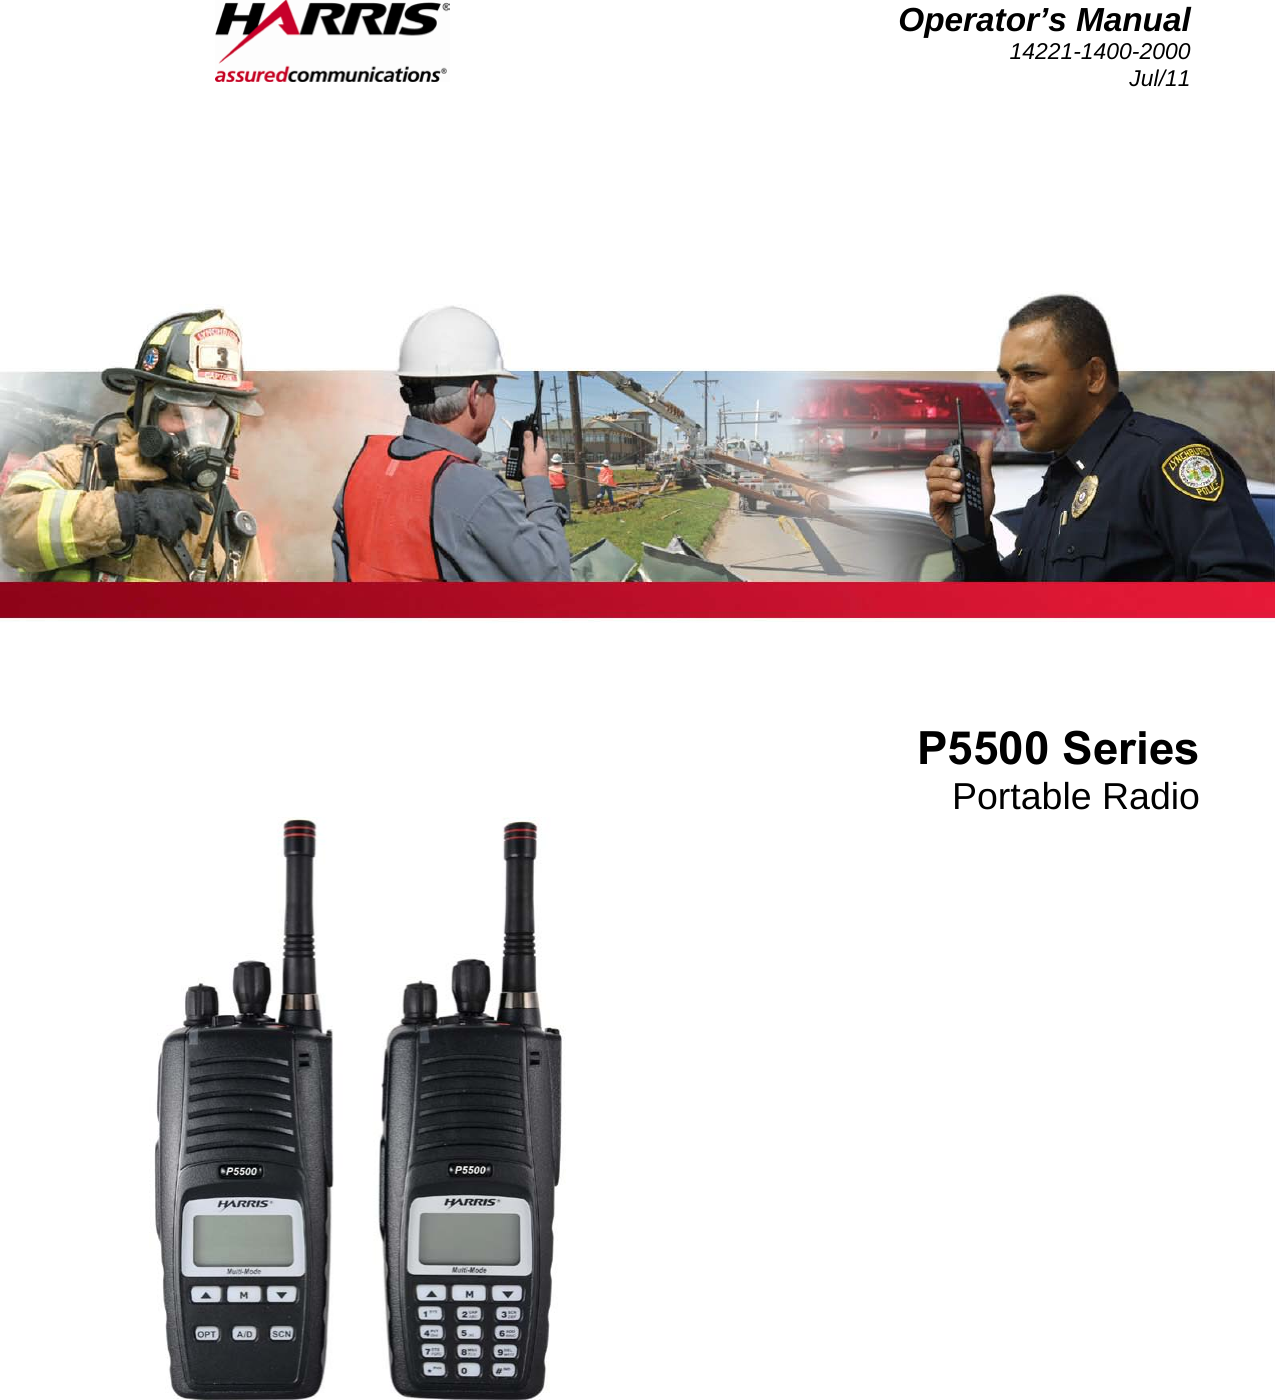  Operator’s Manual 14221-1400-2000 Jul/11     P5500 Series Portable Radio  